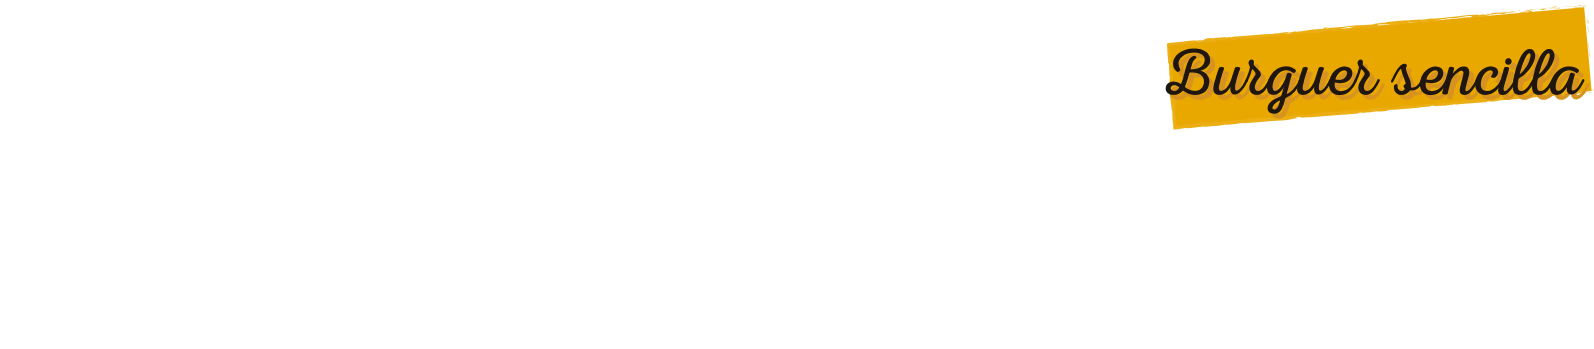 Mini Burguer